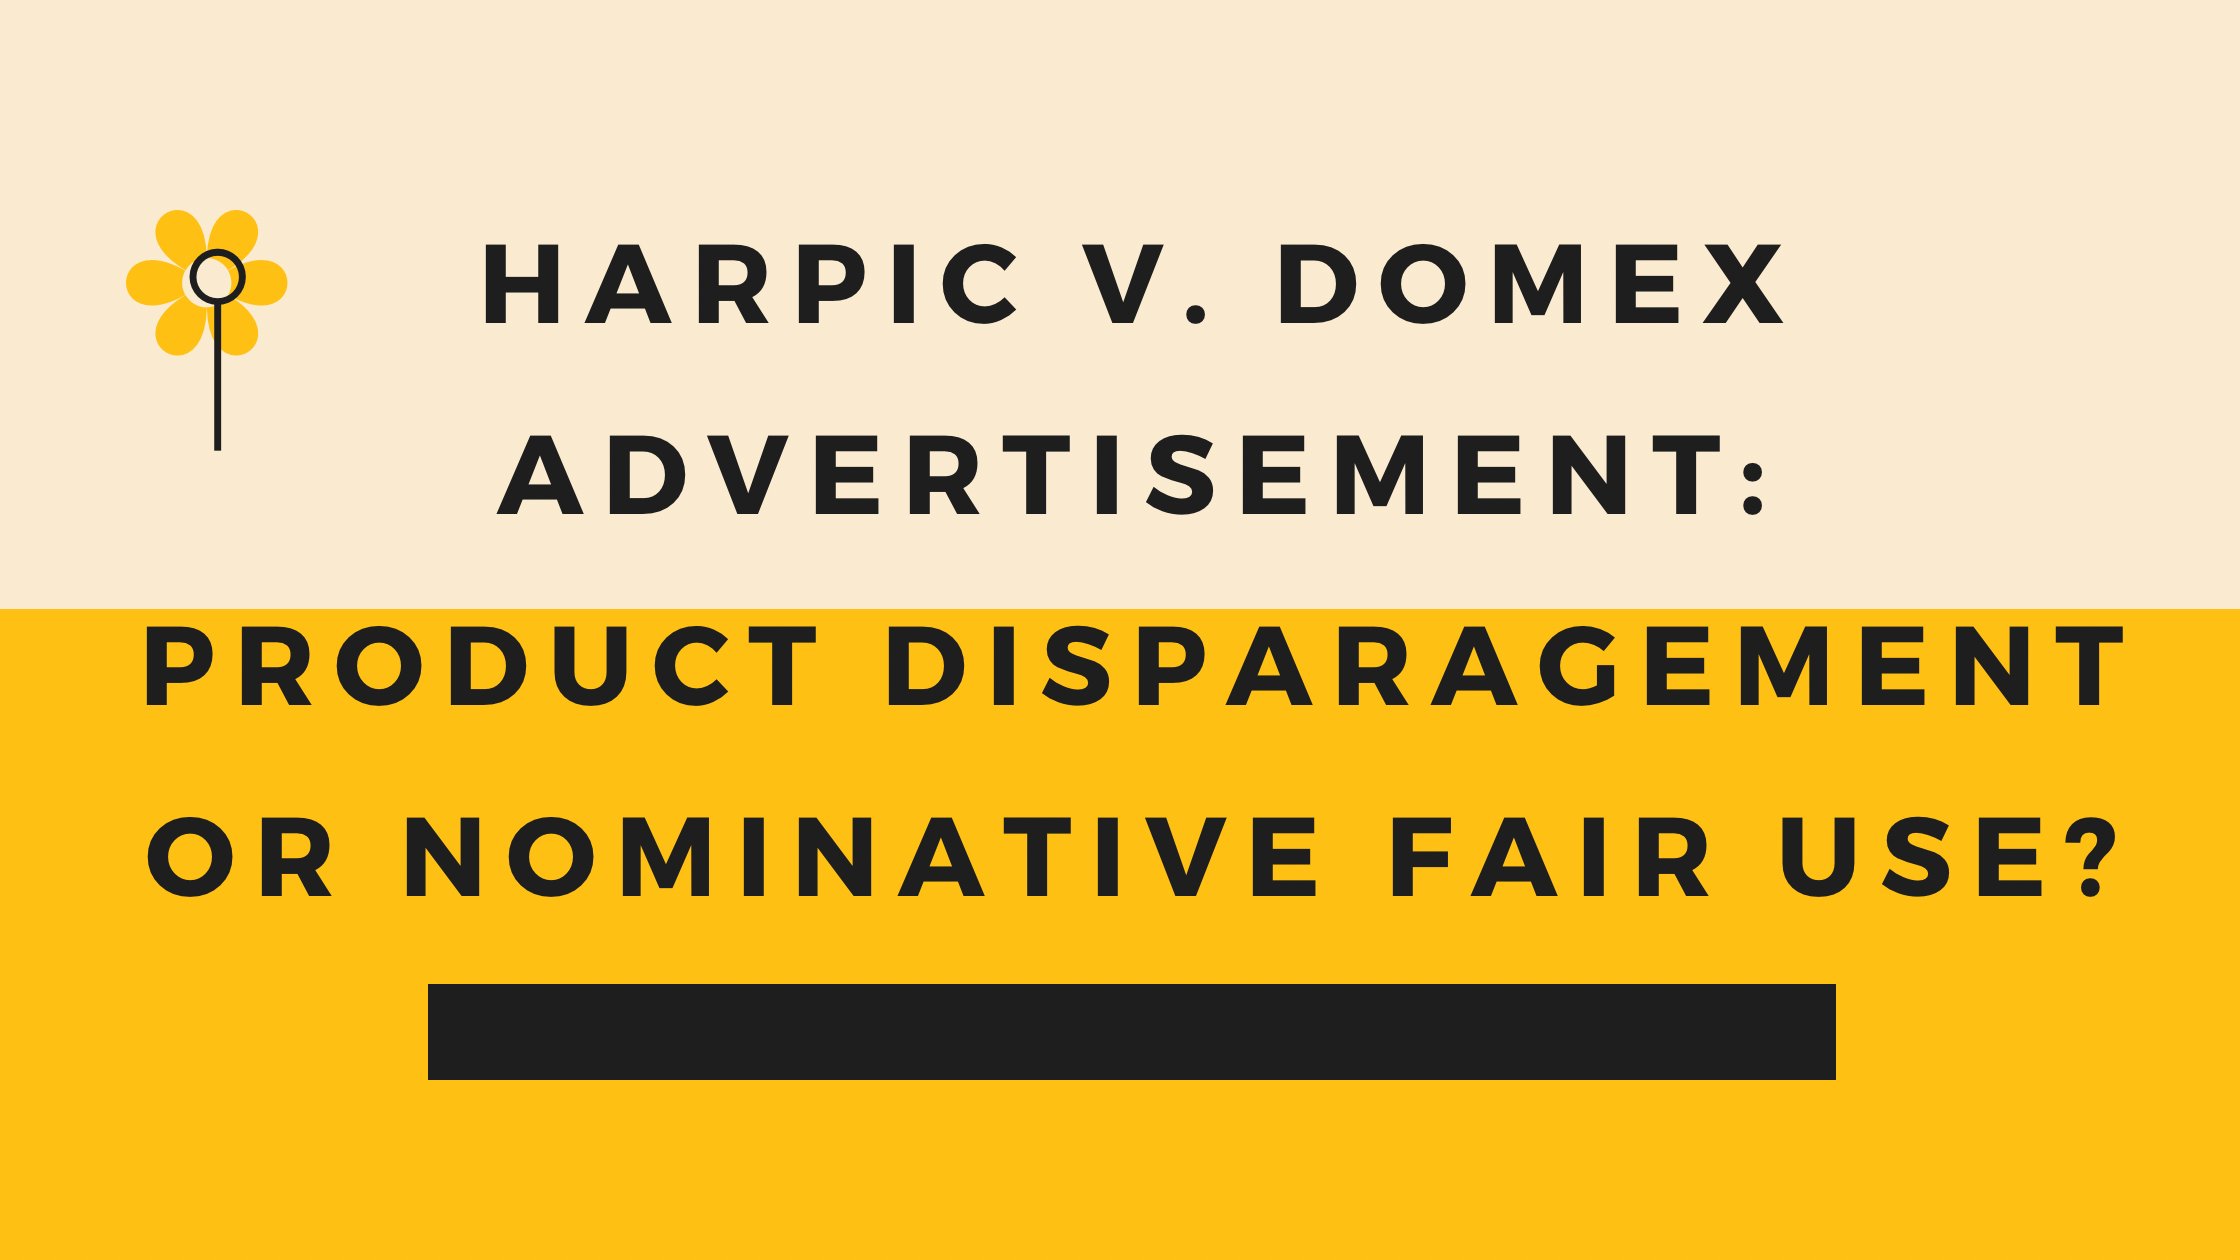 HARPIC V. DOMEX ADVERTISEMENT: PRODUCT DISPARAGEMENT, OR NOMINATIVE FAIR USE?